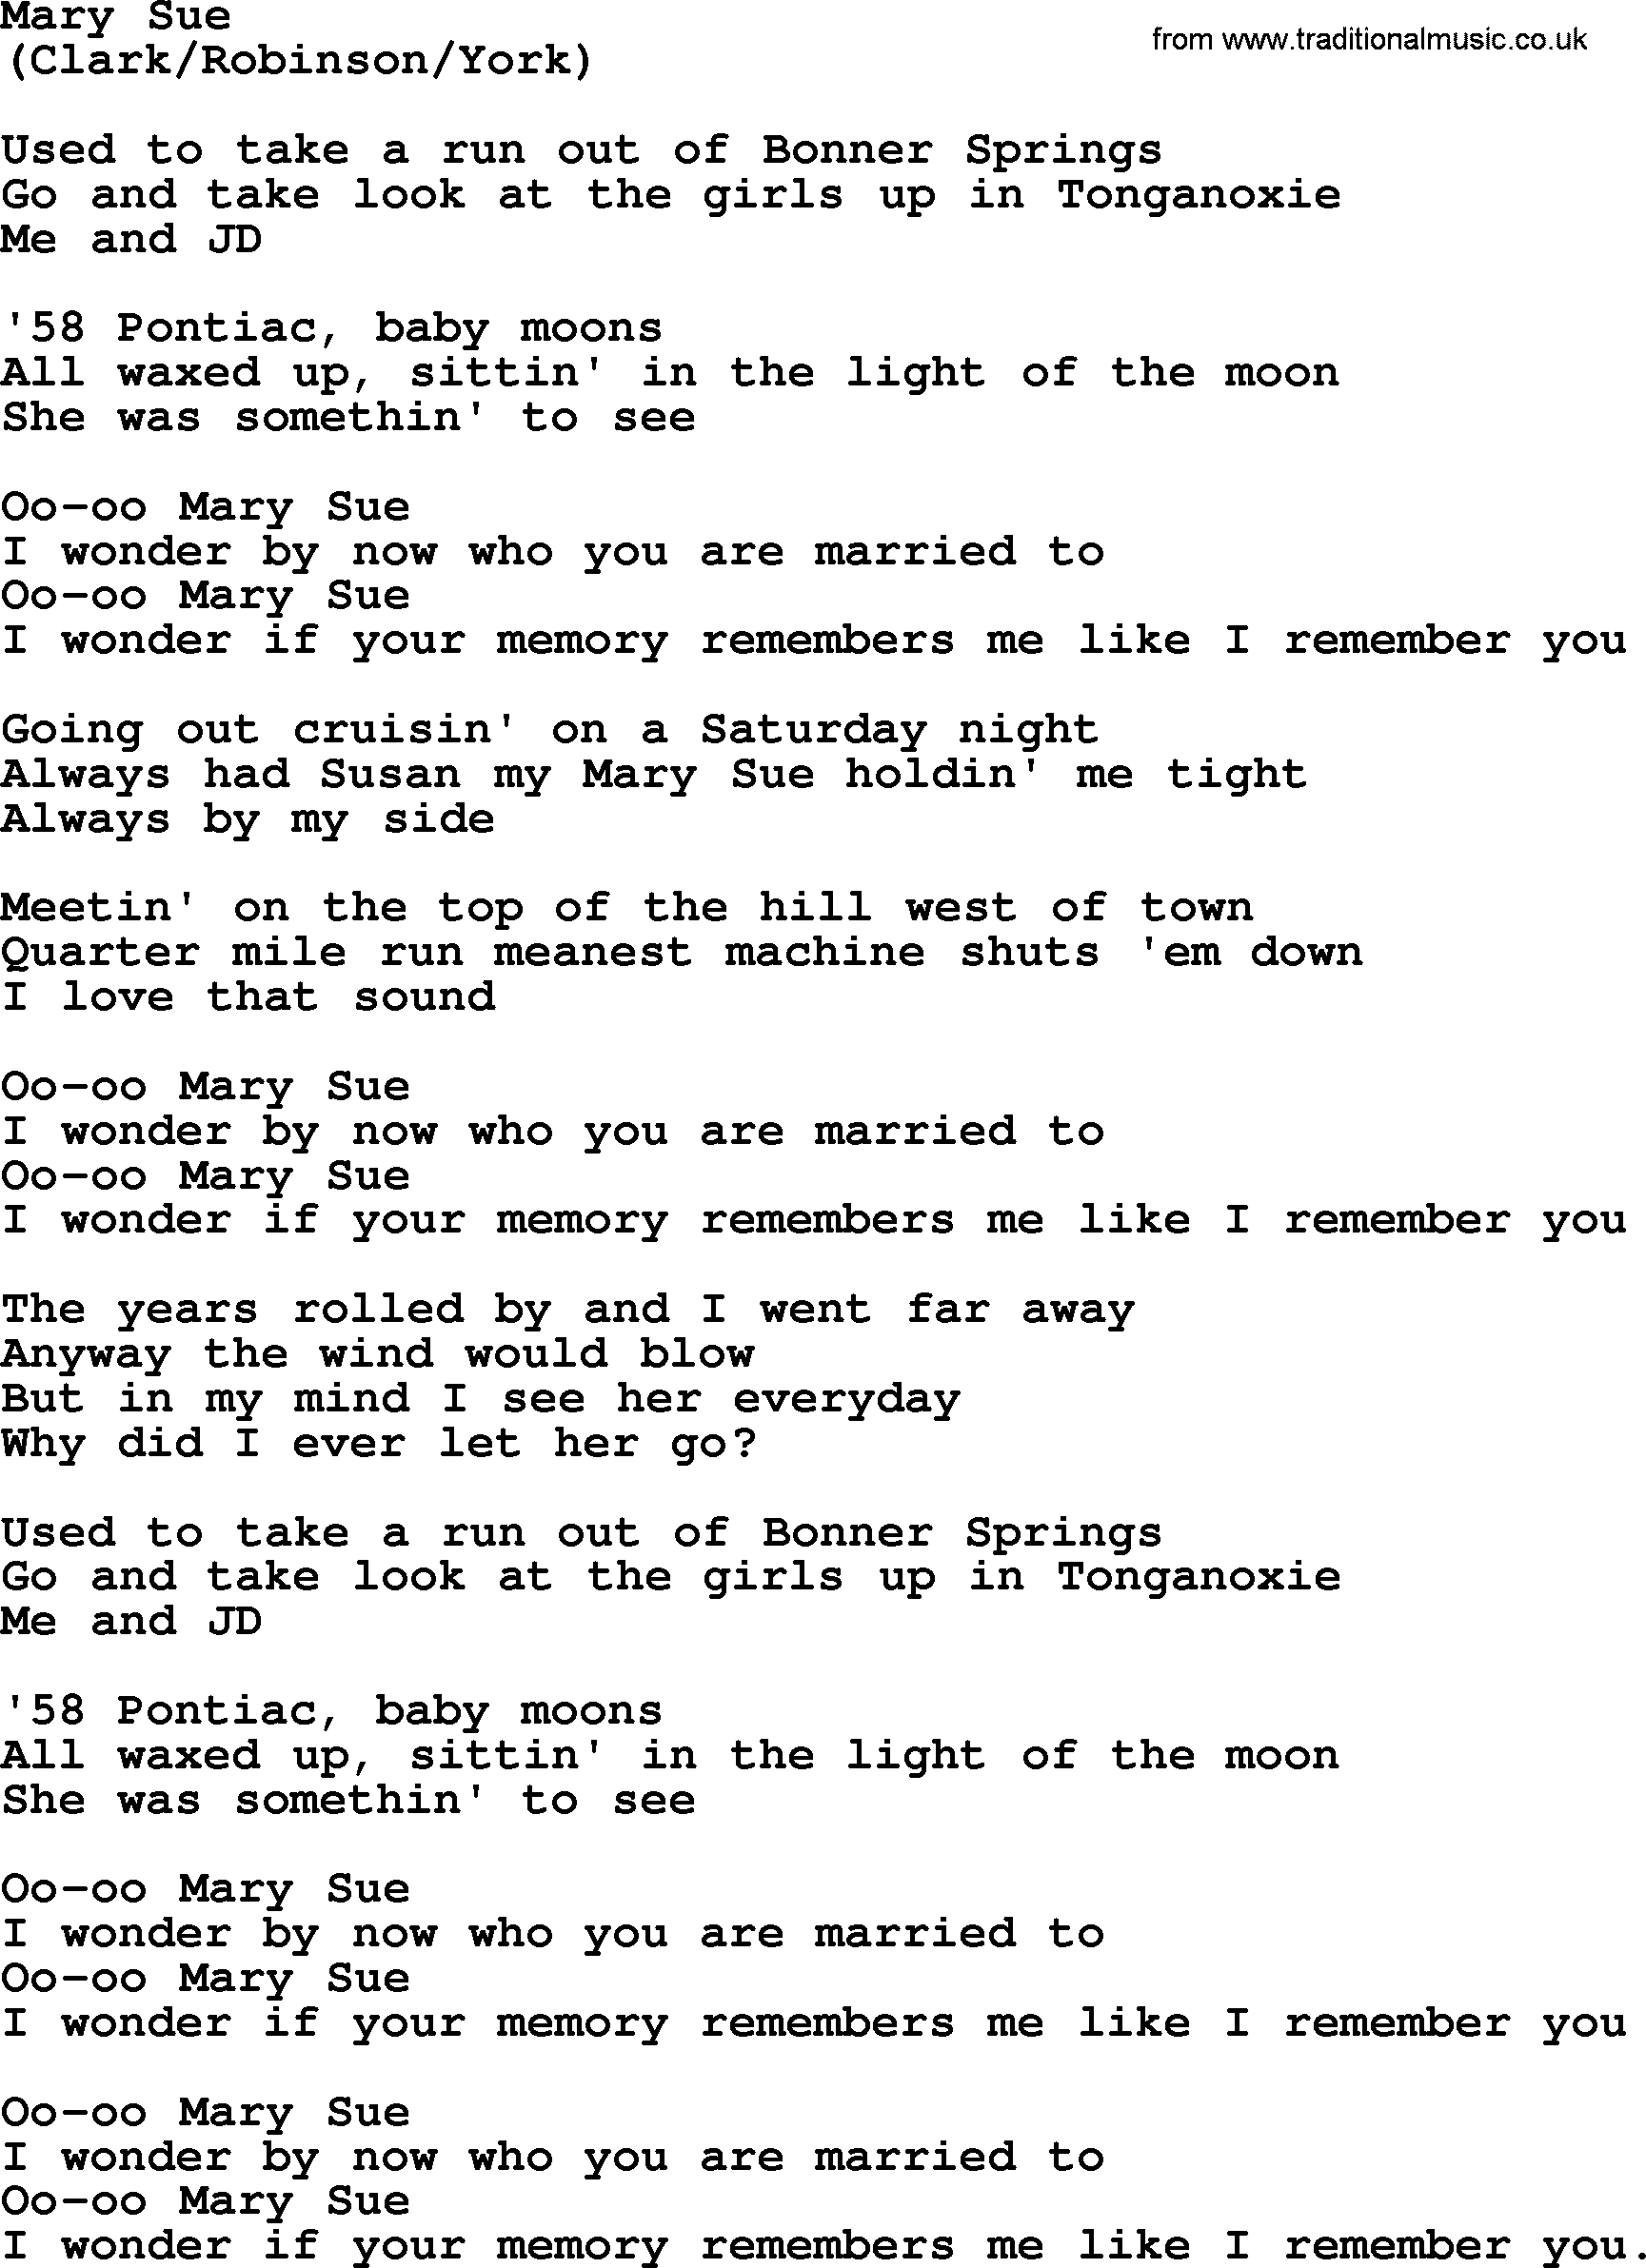 The Byrds song Mary Sue, lyrics